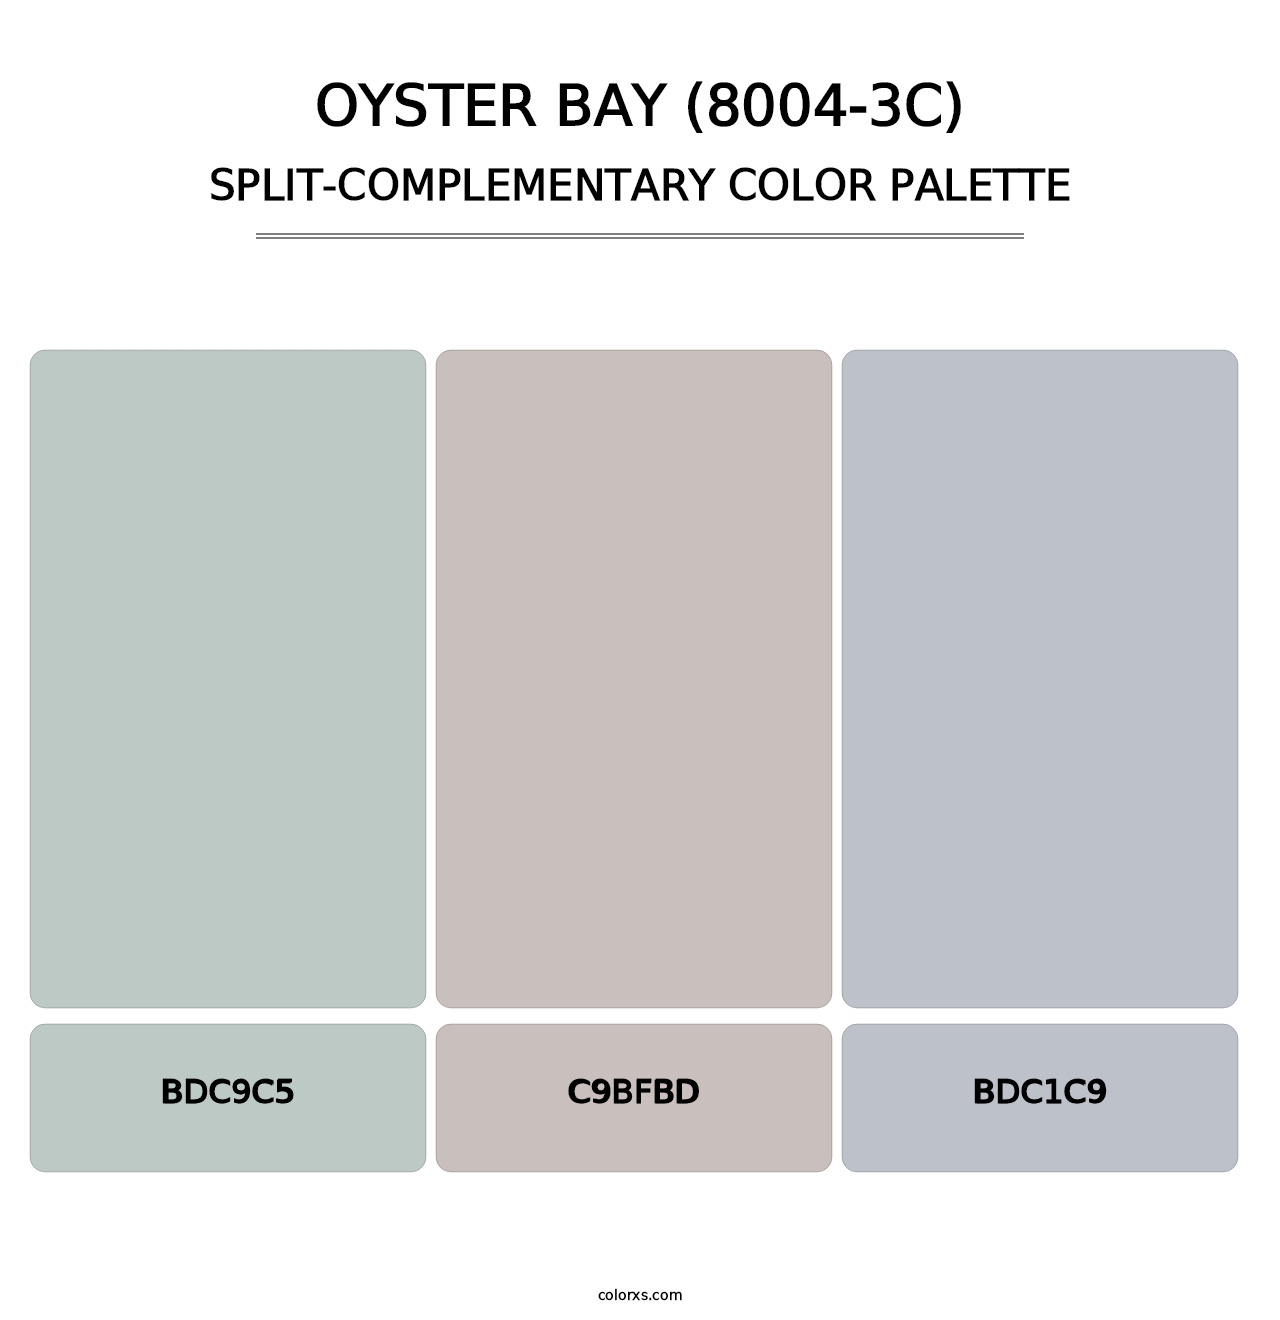 Oyster Bay (8004-3C) - Split-Complementary Color Palette